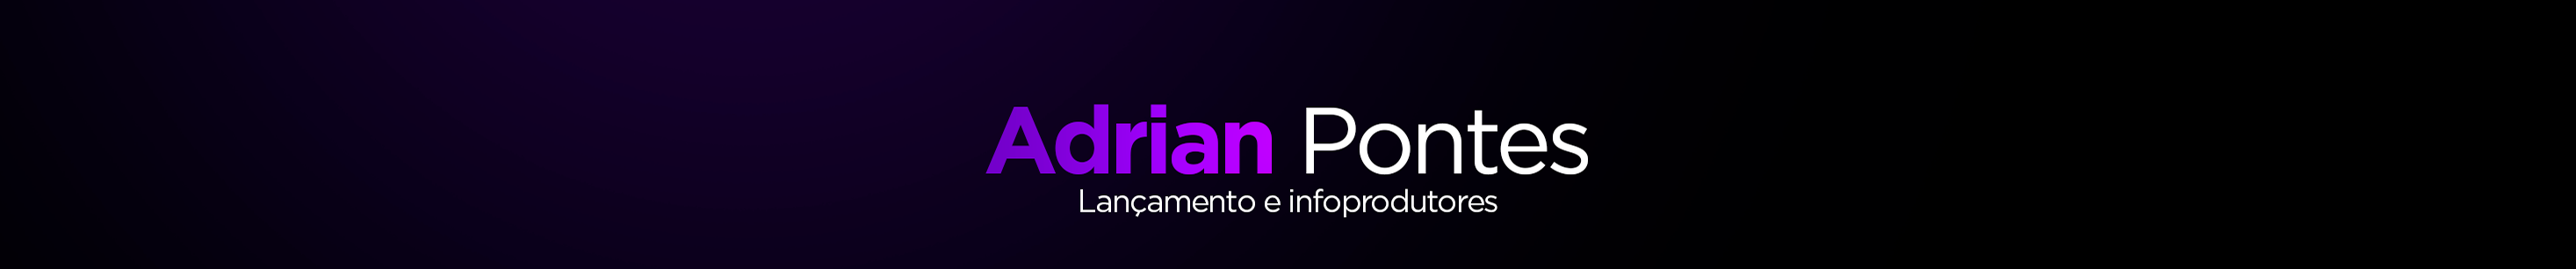 Adrian Pontes's profile banner